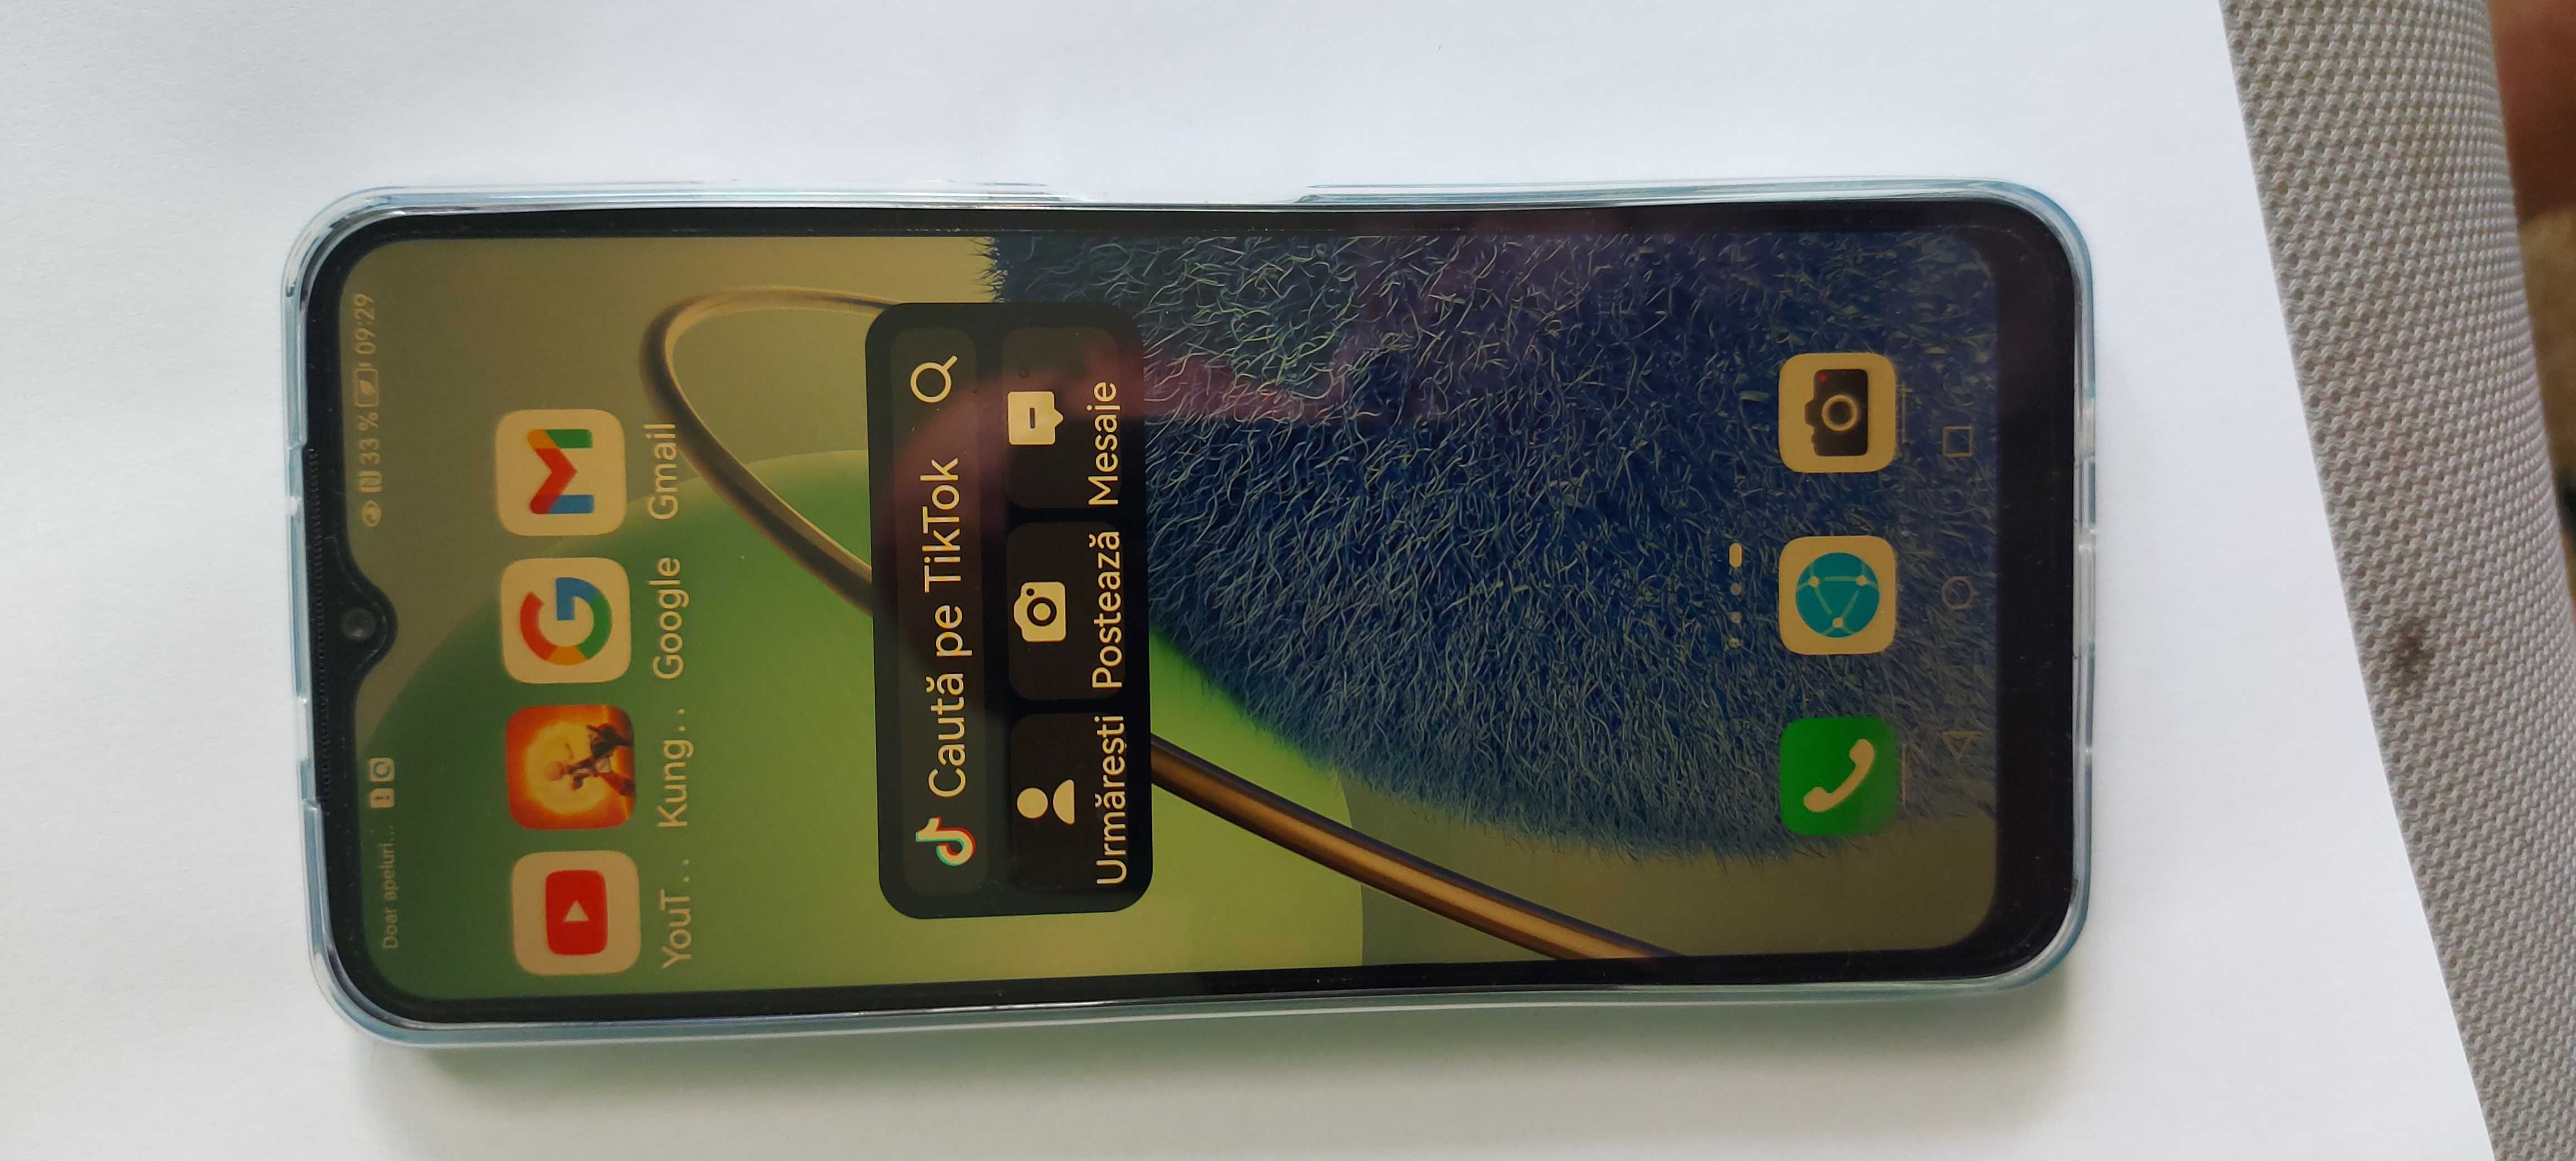 vand smartphone Huawei nova y61, nou, 4 ani garantie